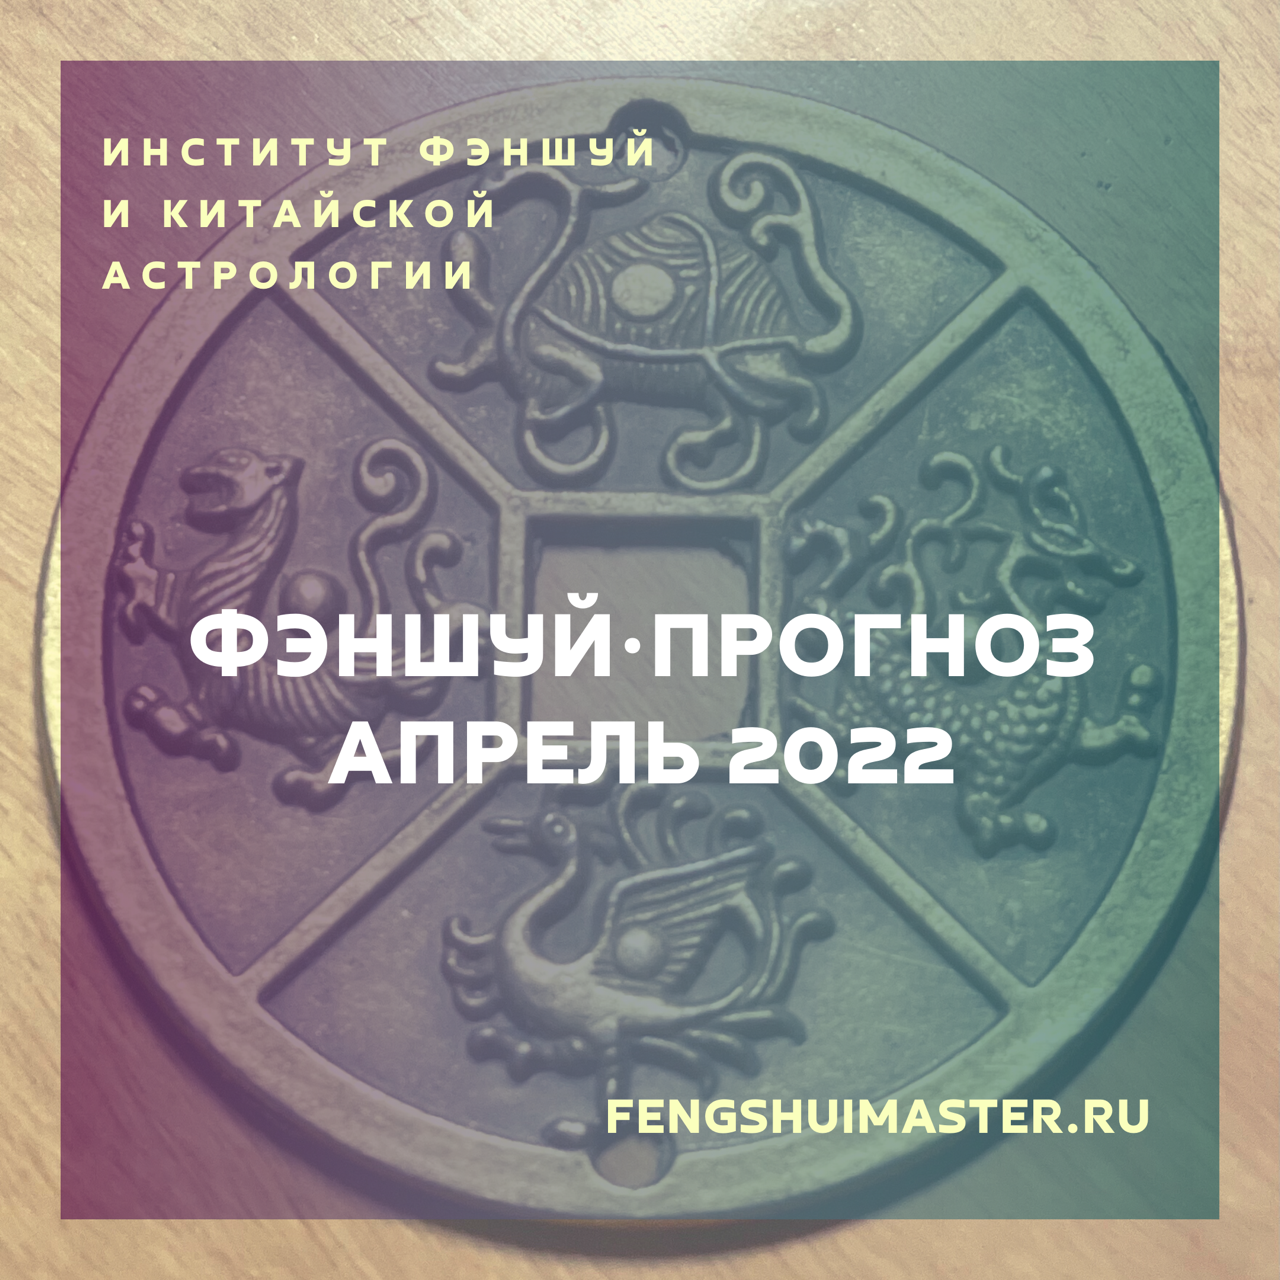 Фэншуй-прогноз апрель 2022 • Fengshuimaster.Ru